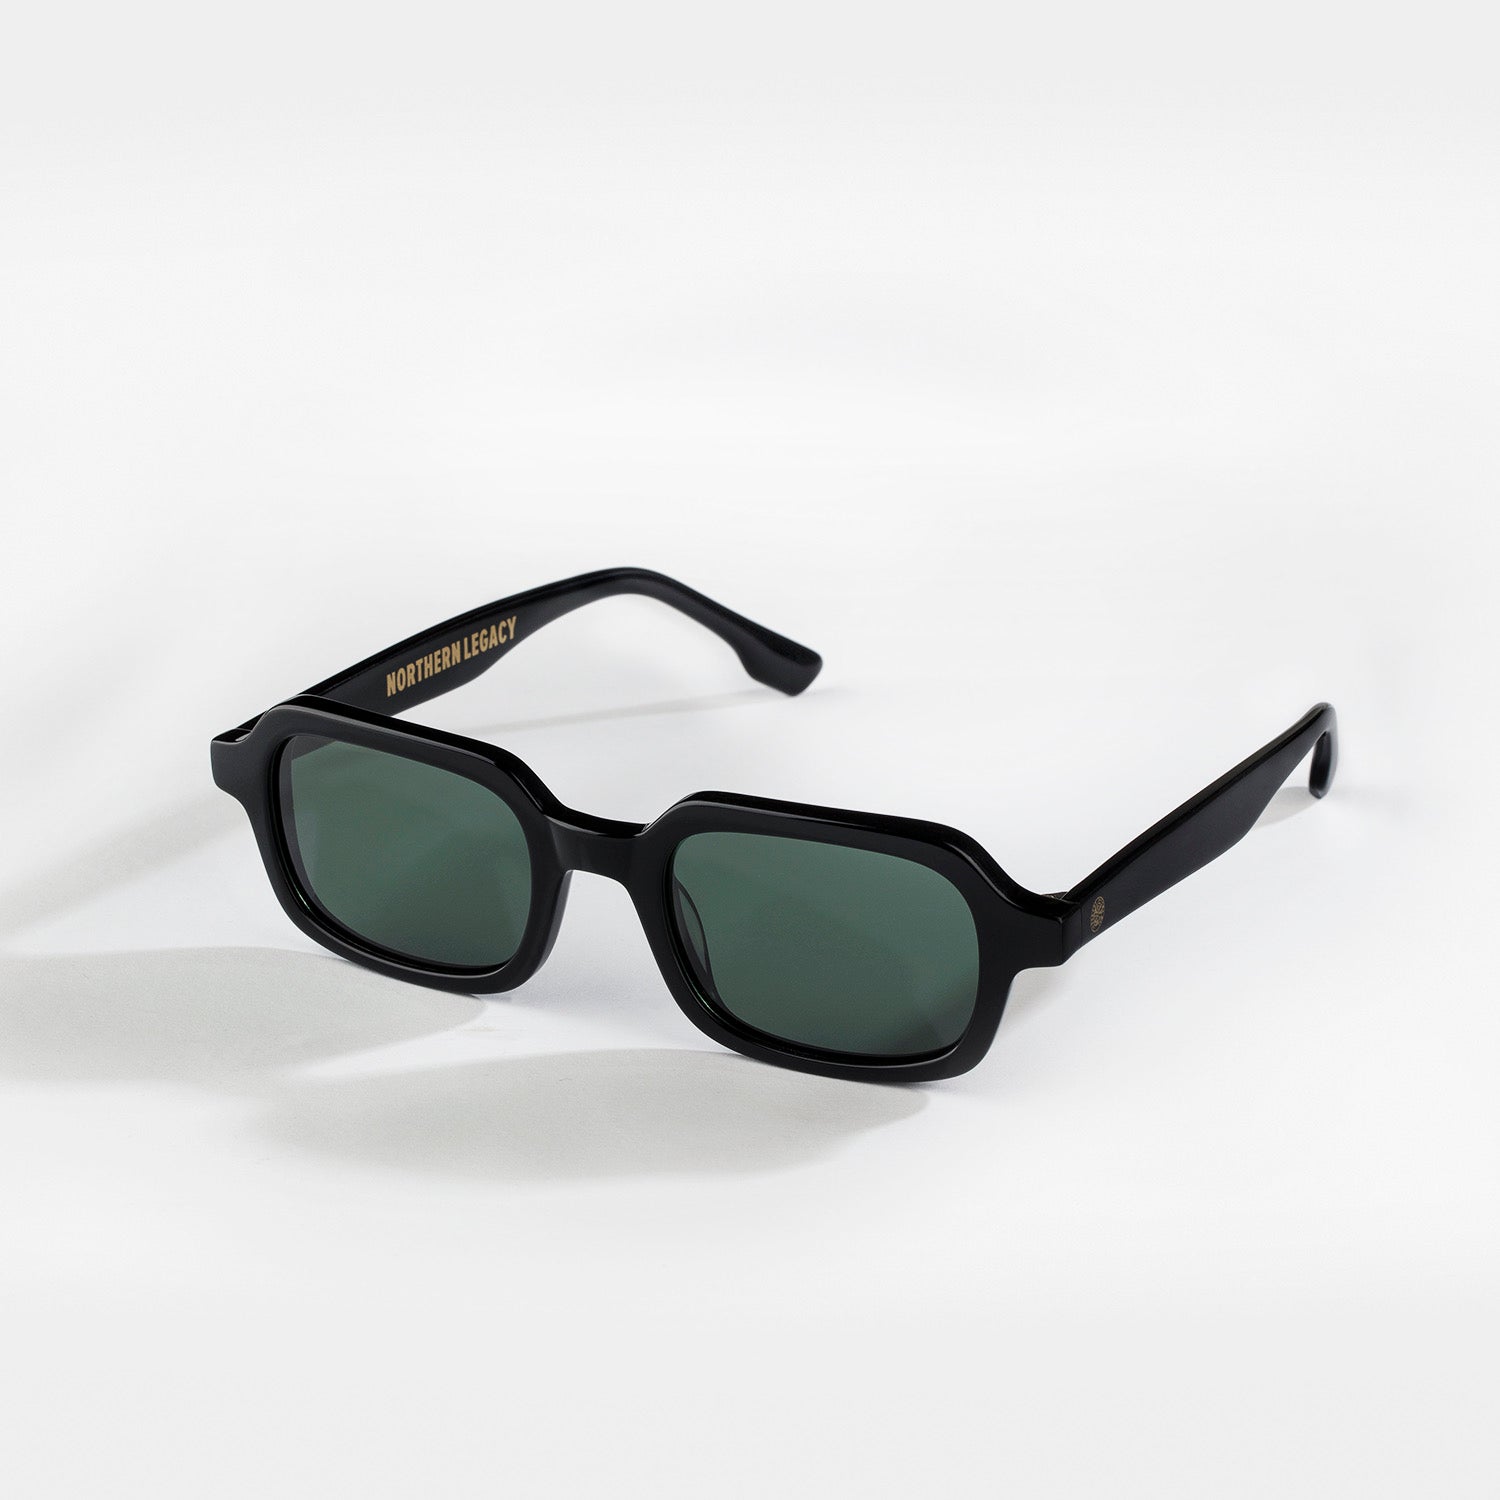 Modern sunglasses - Deep black/green